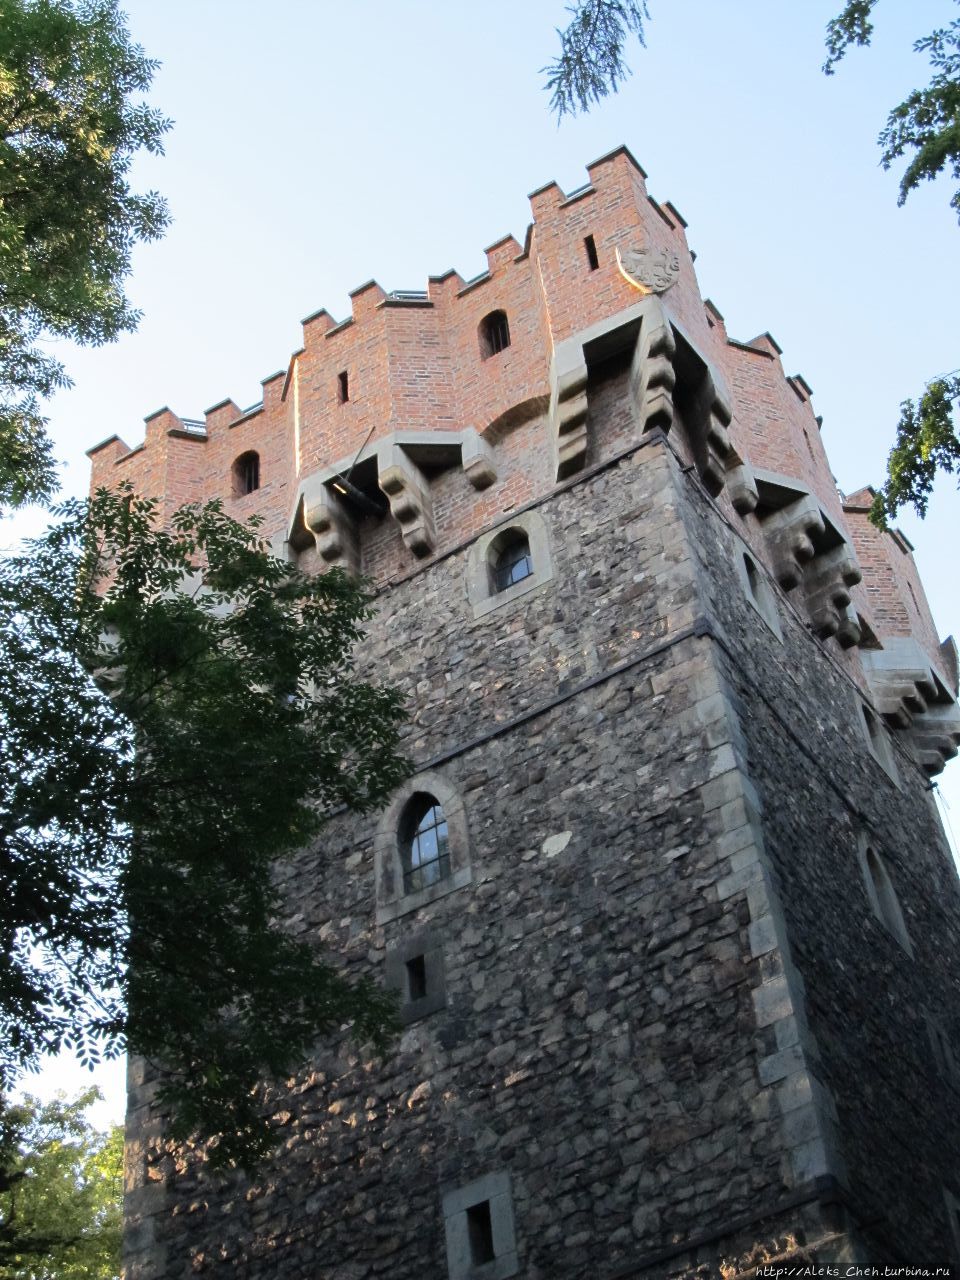 Непрезентабельный Замок как повод похода за границу Цешин, Польша